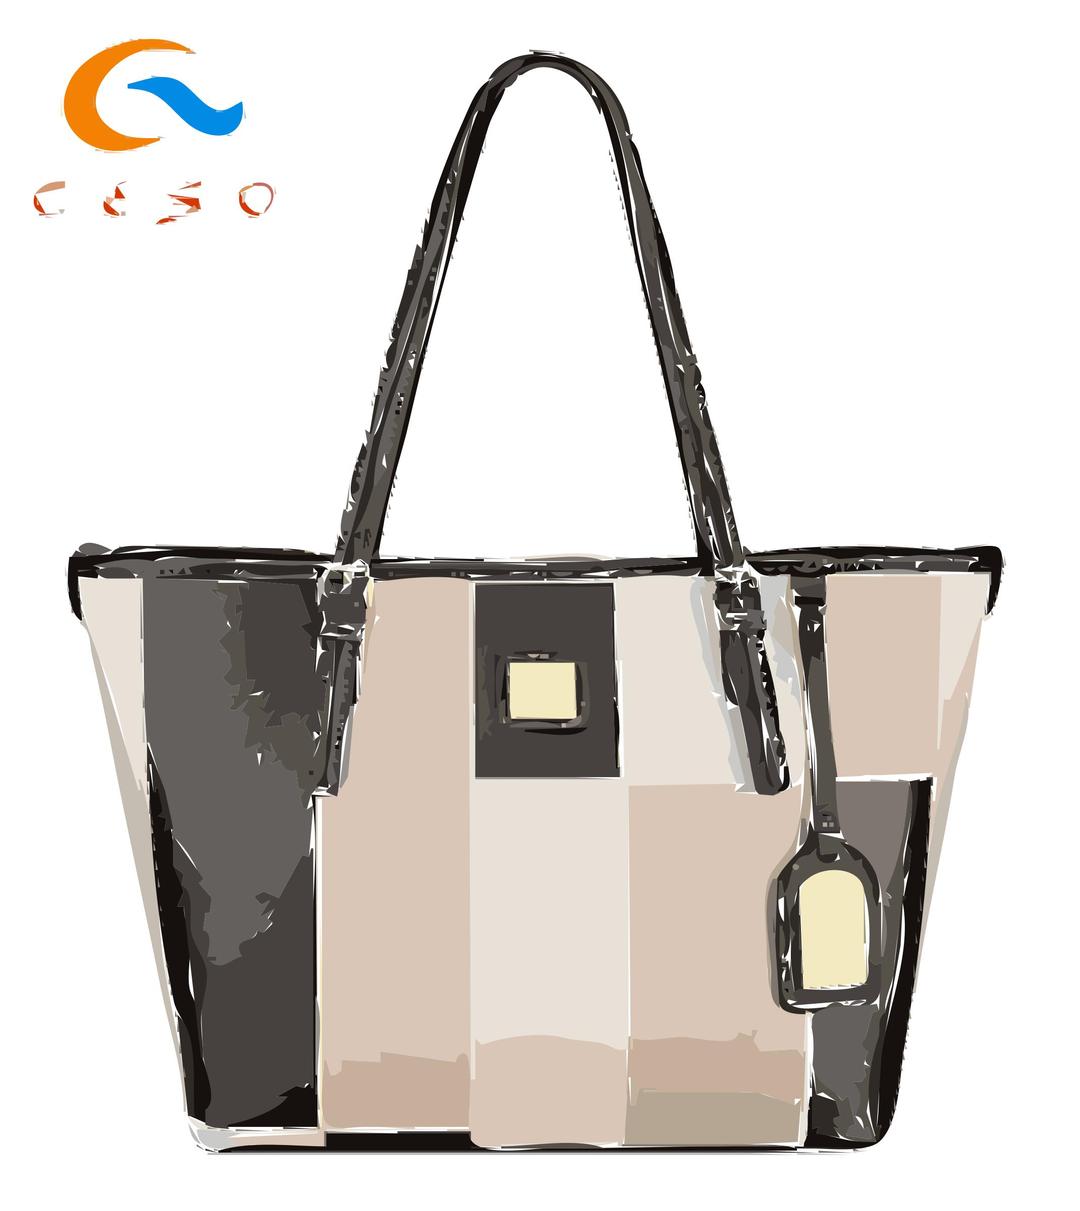 Tricolor Leather Handbag with Logo png transparent